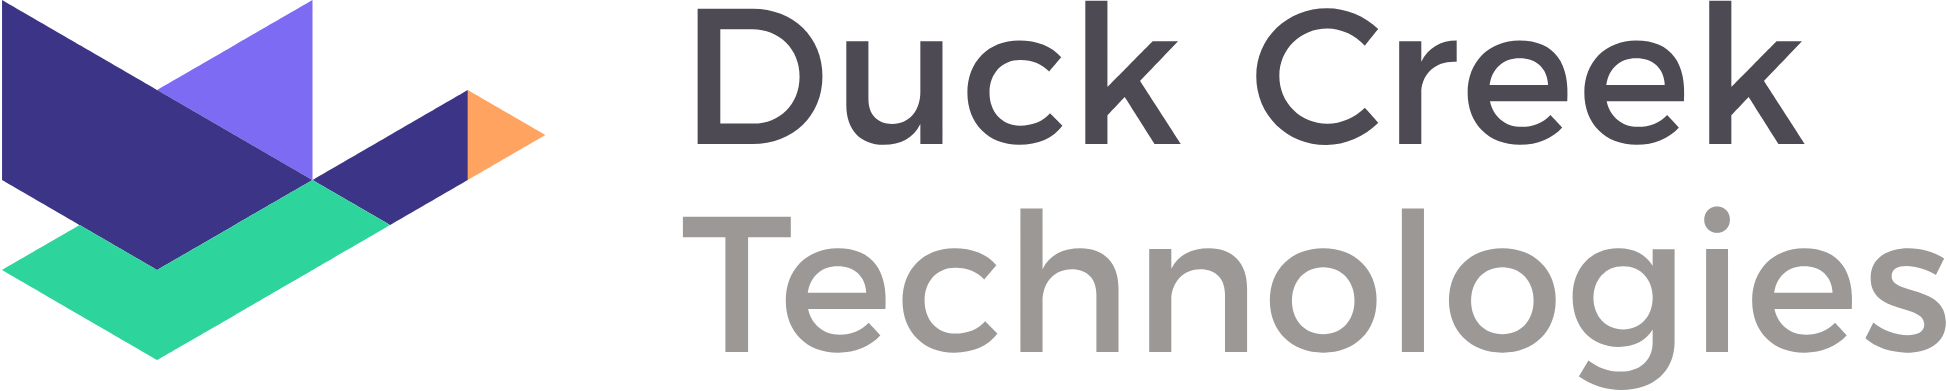 Duck Creek Technologies logo large (transparent PNG)